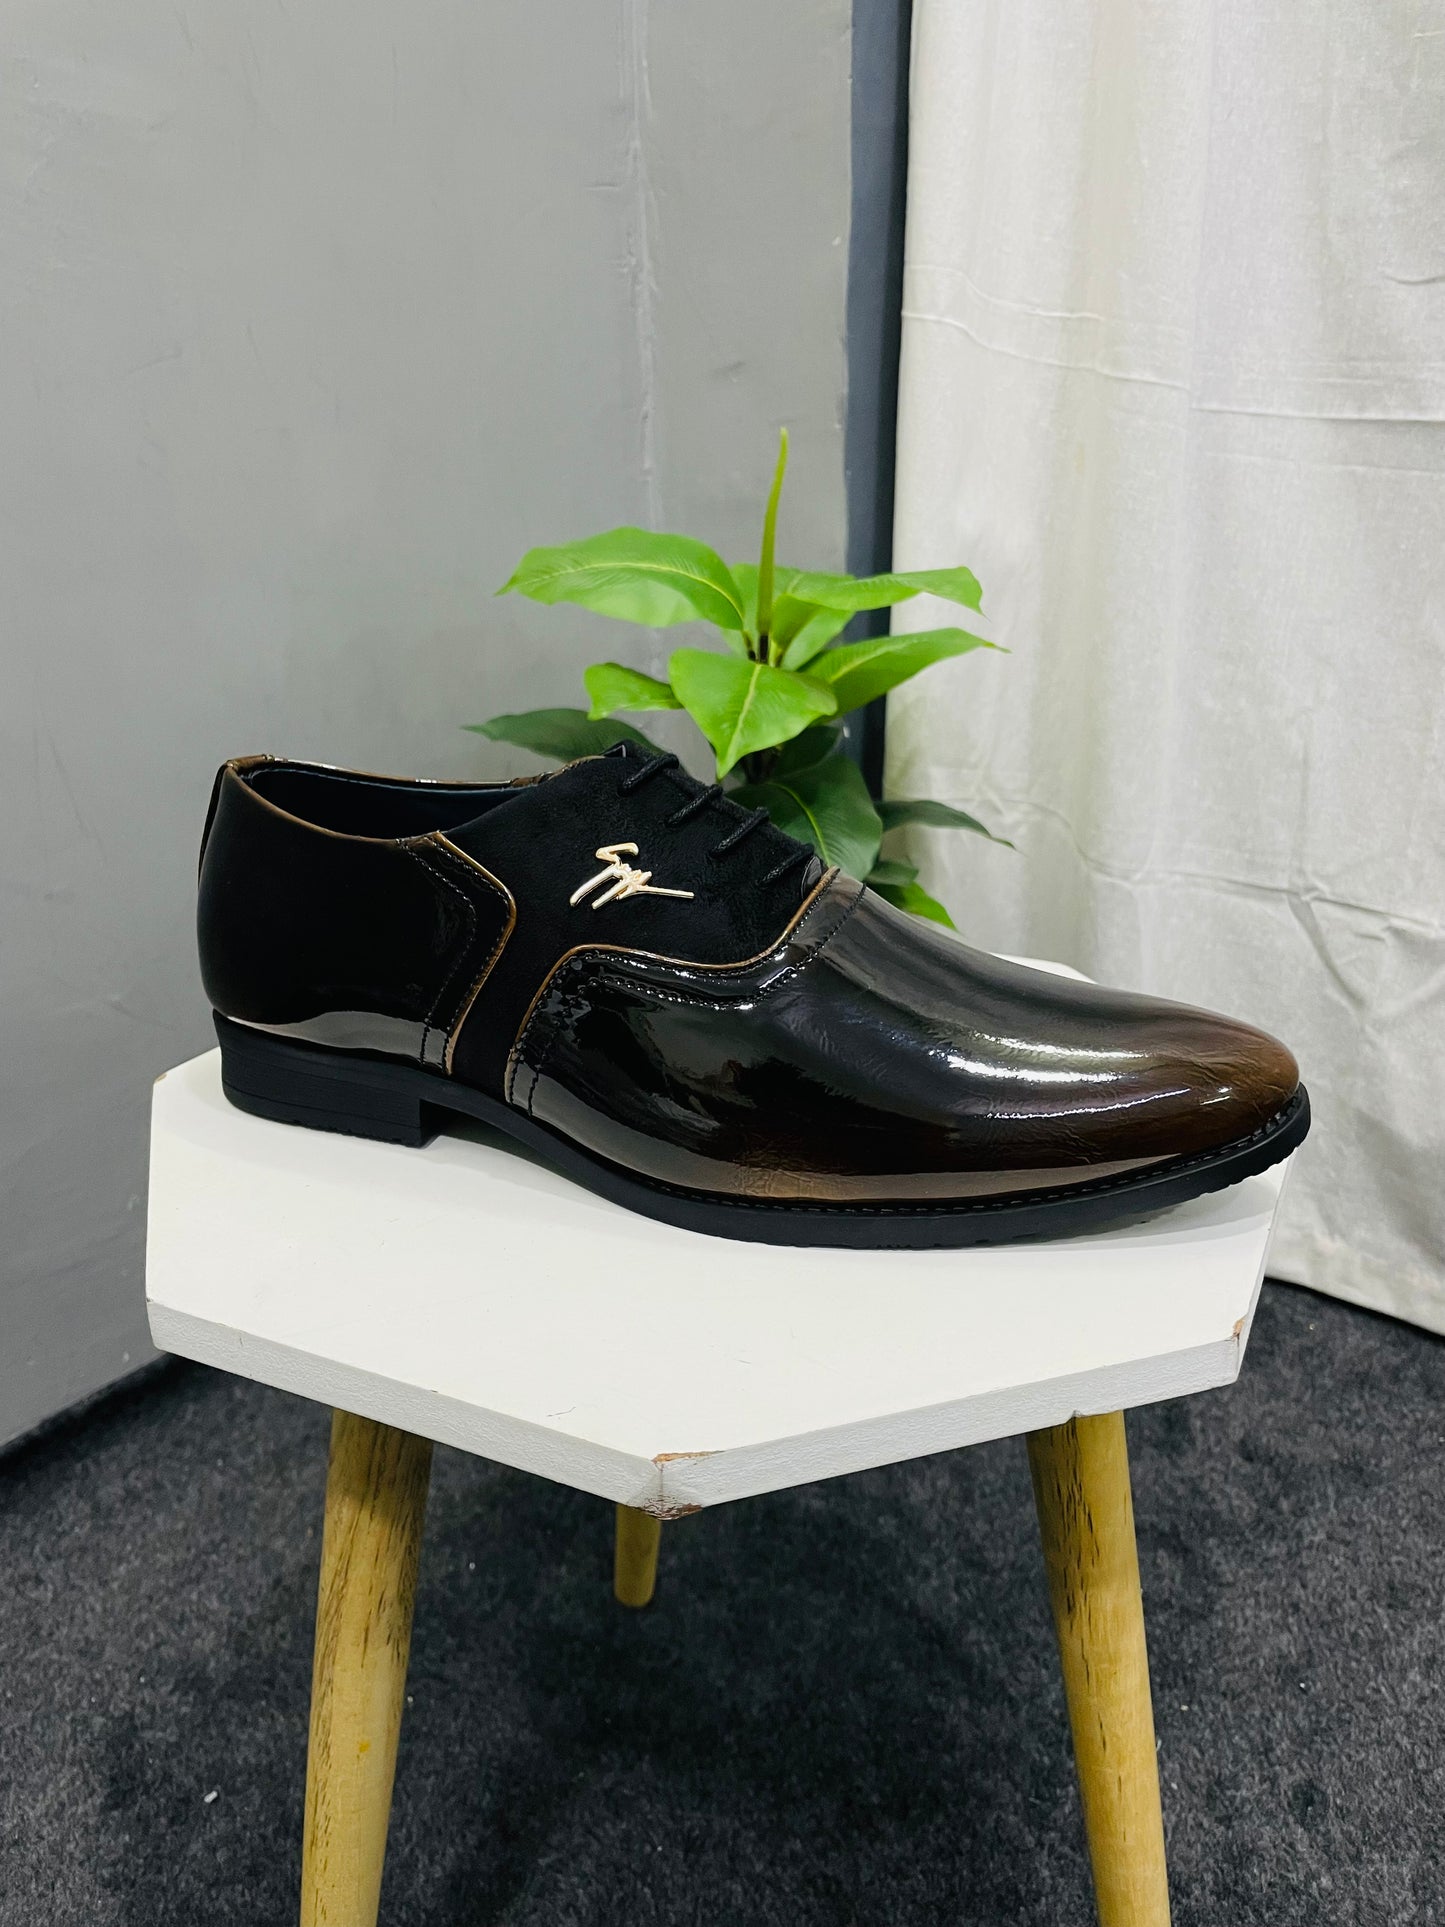 <img src="mens-formal-shoes.jpg" alt="Classic Brown Leather Oxfords - Men's Formal Dress Shoes - Branded Baba">